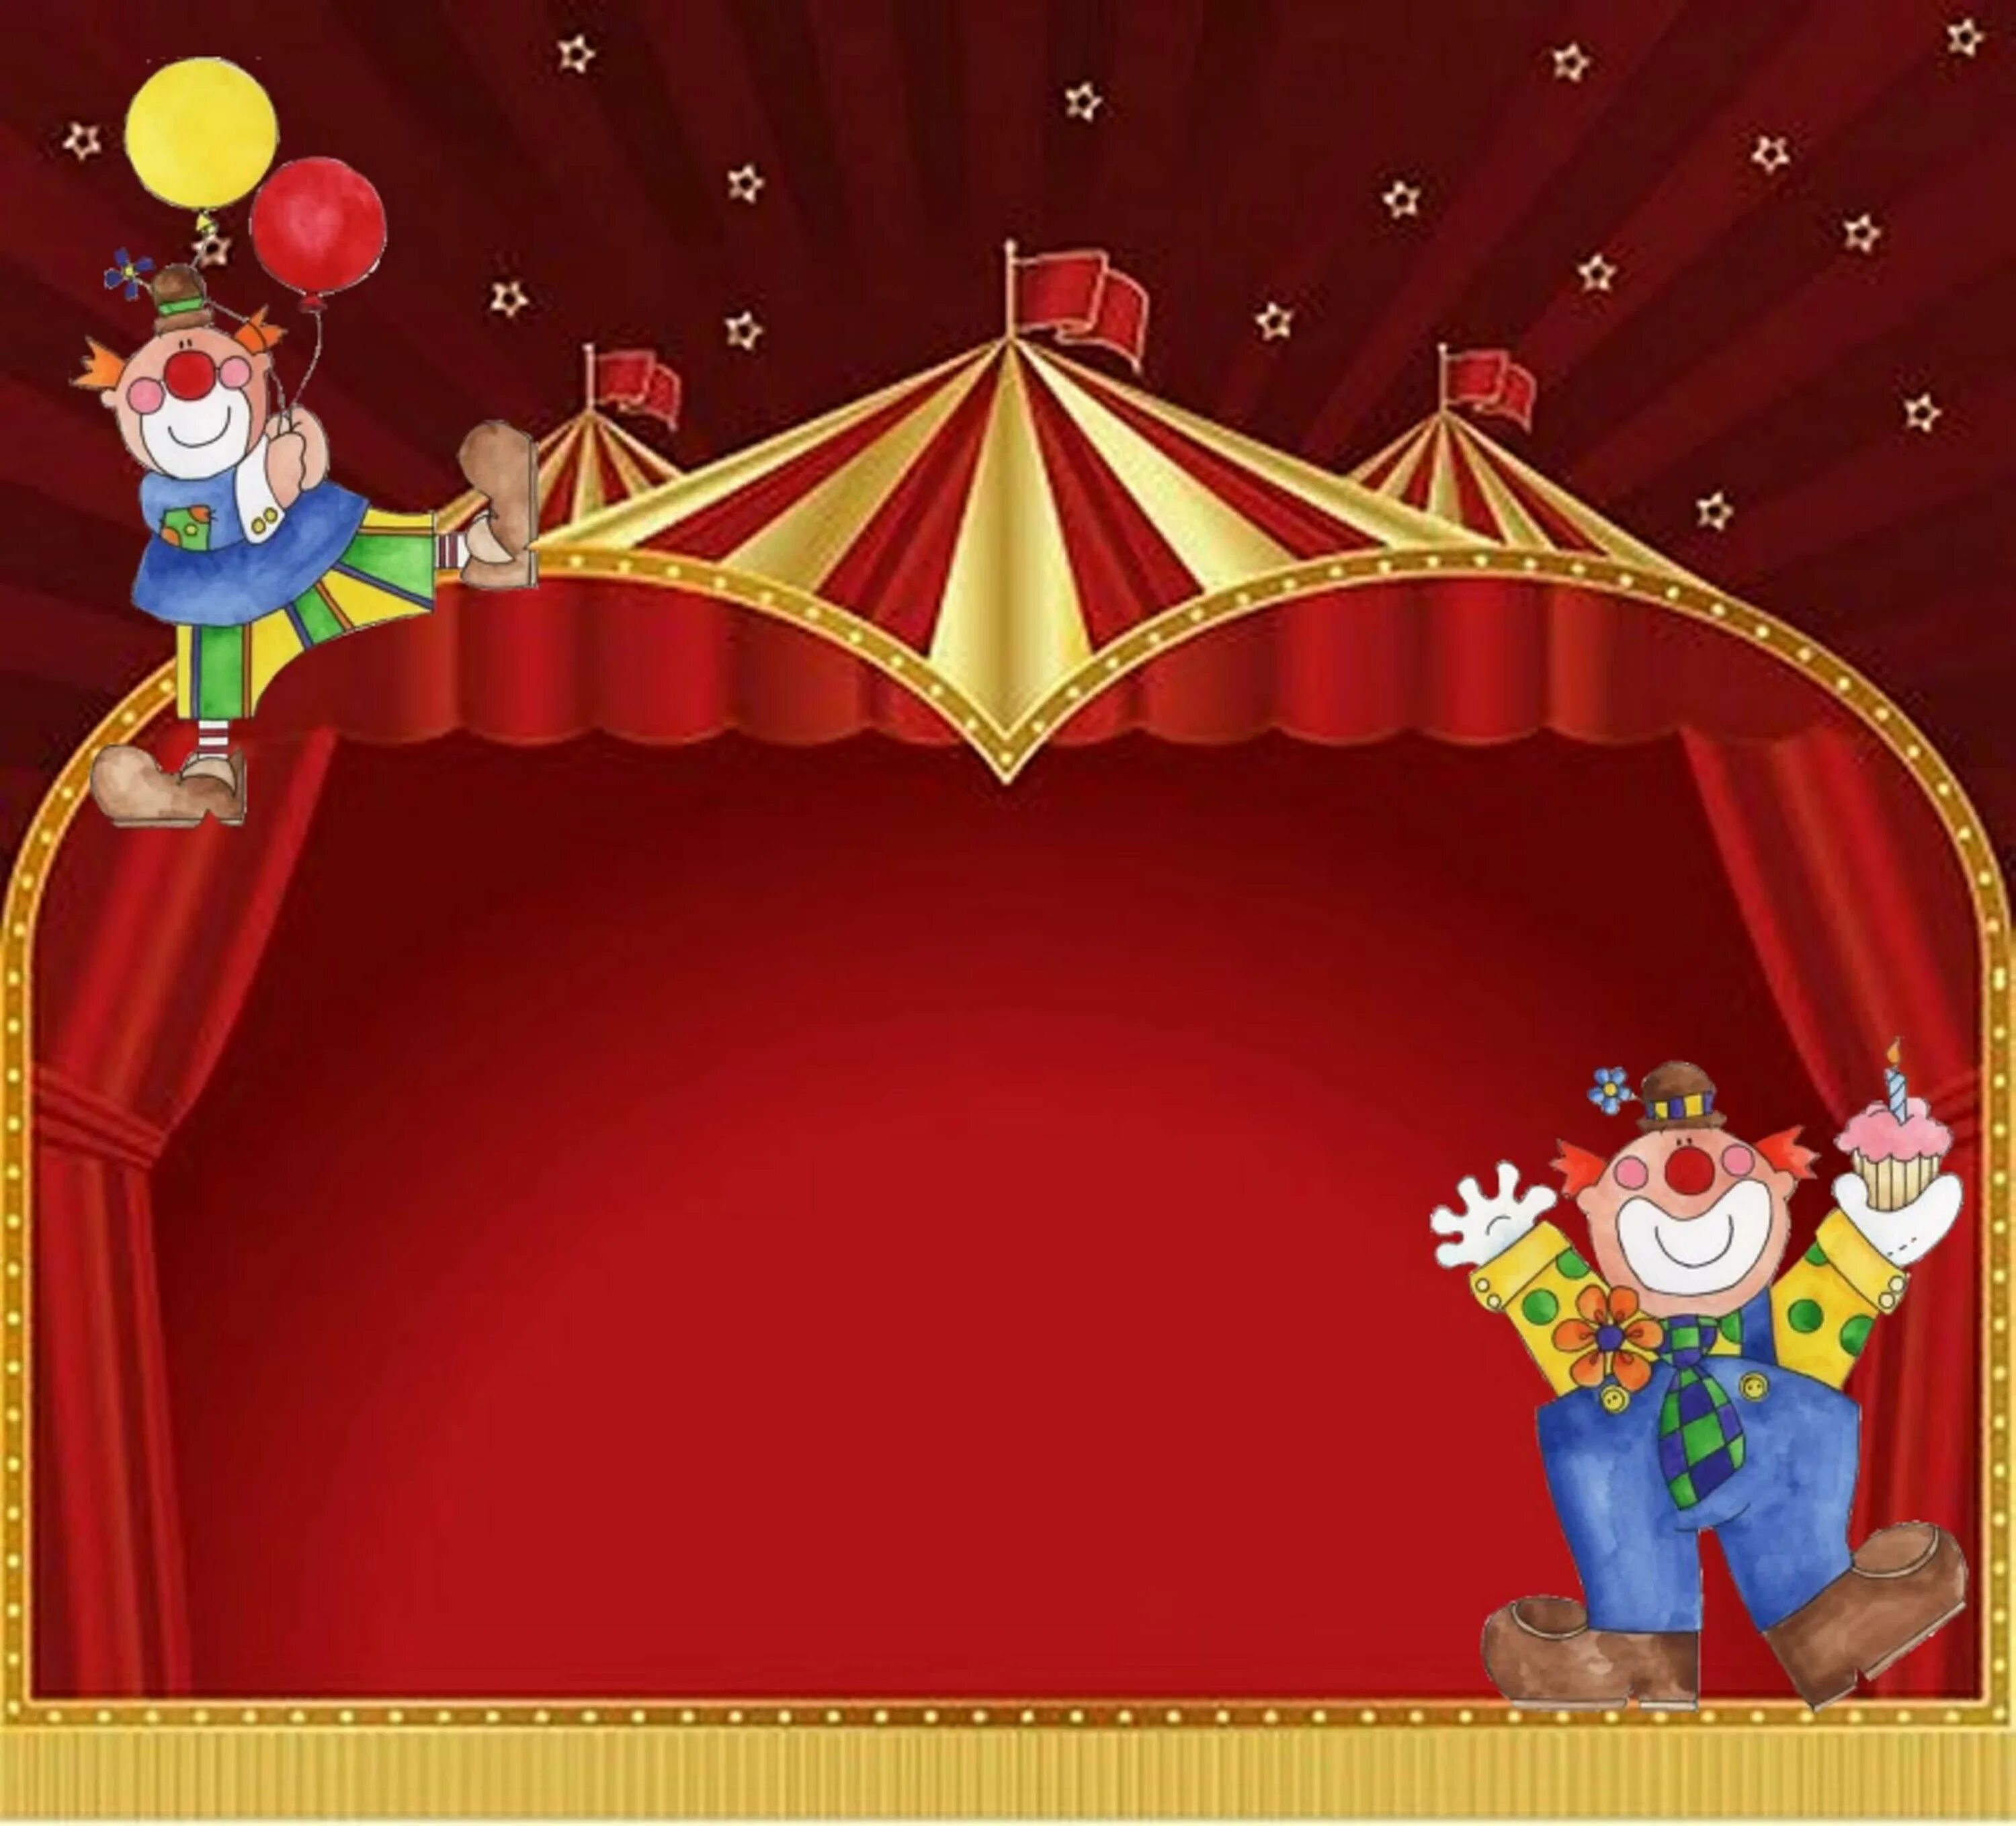 Шаблоны театра для детей. Цирк фон. Рамки кукольный театр для детей. Цирковой фон. Цирковая рамка.